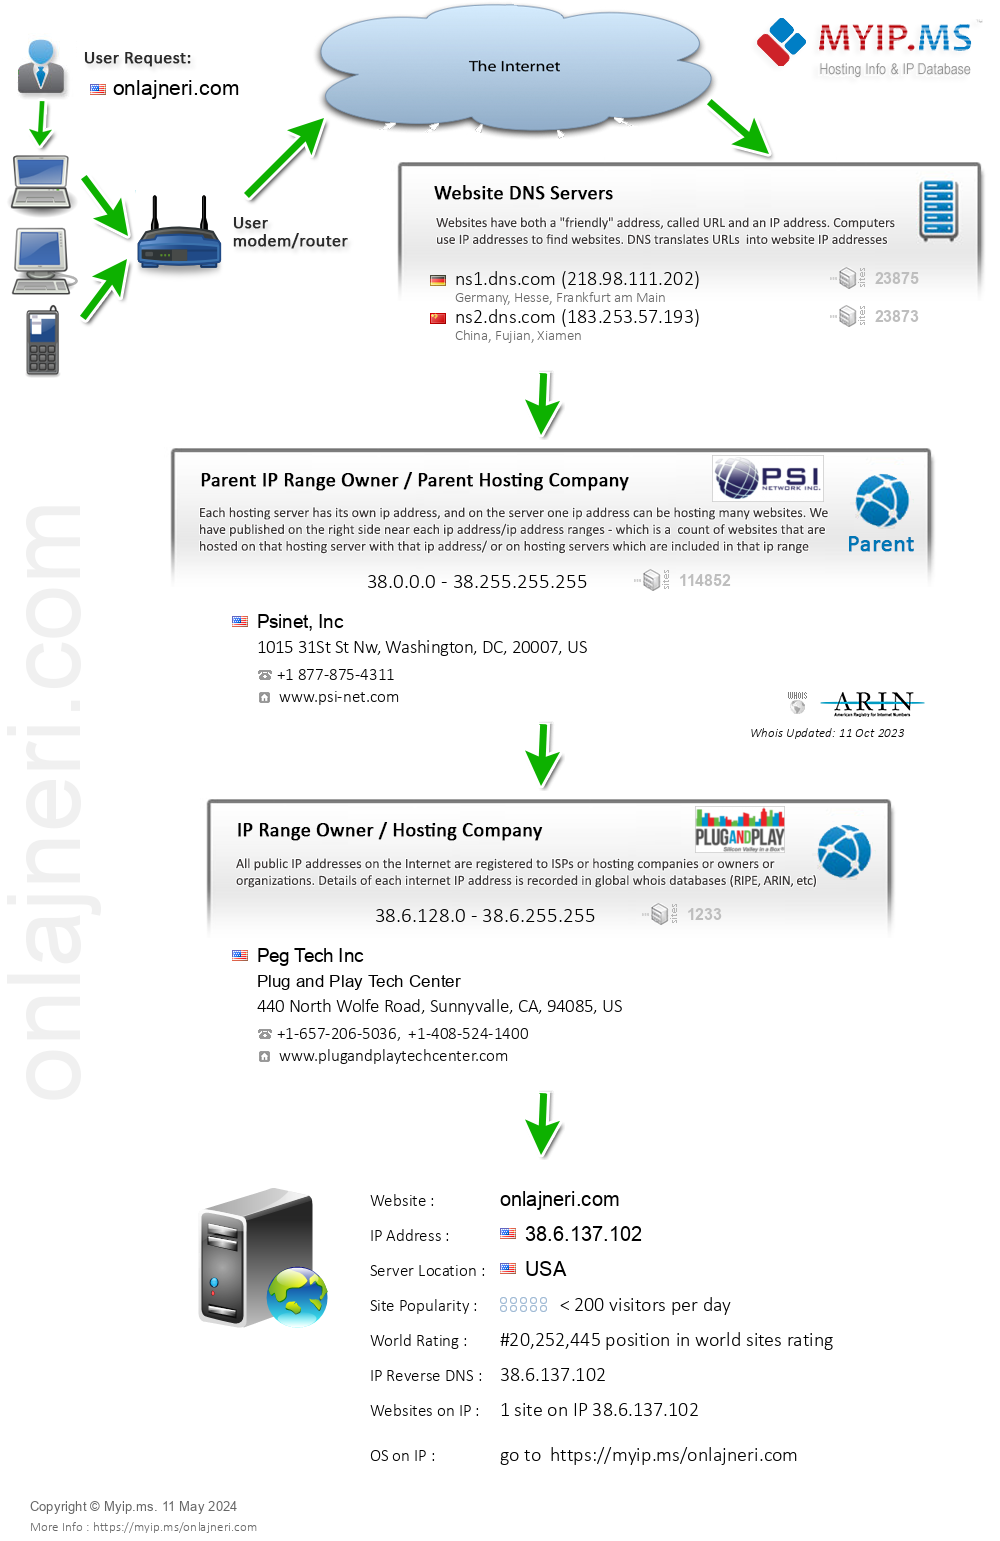 Onlajneri.com - Website Hosting Visual IP Diagram